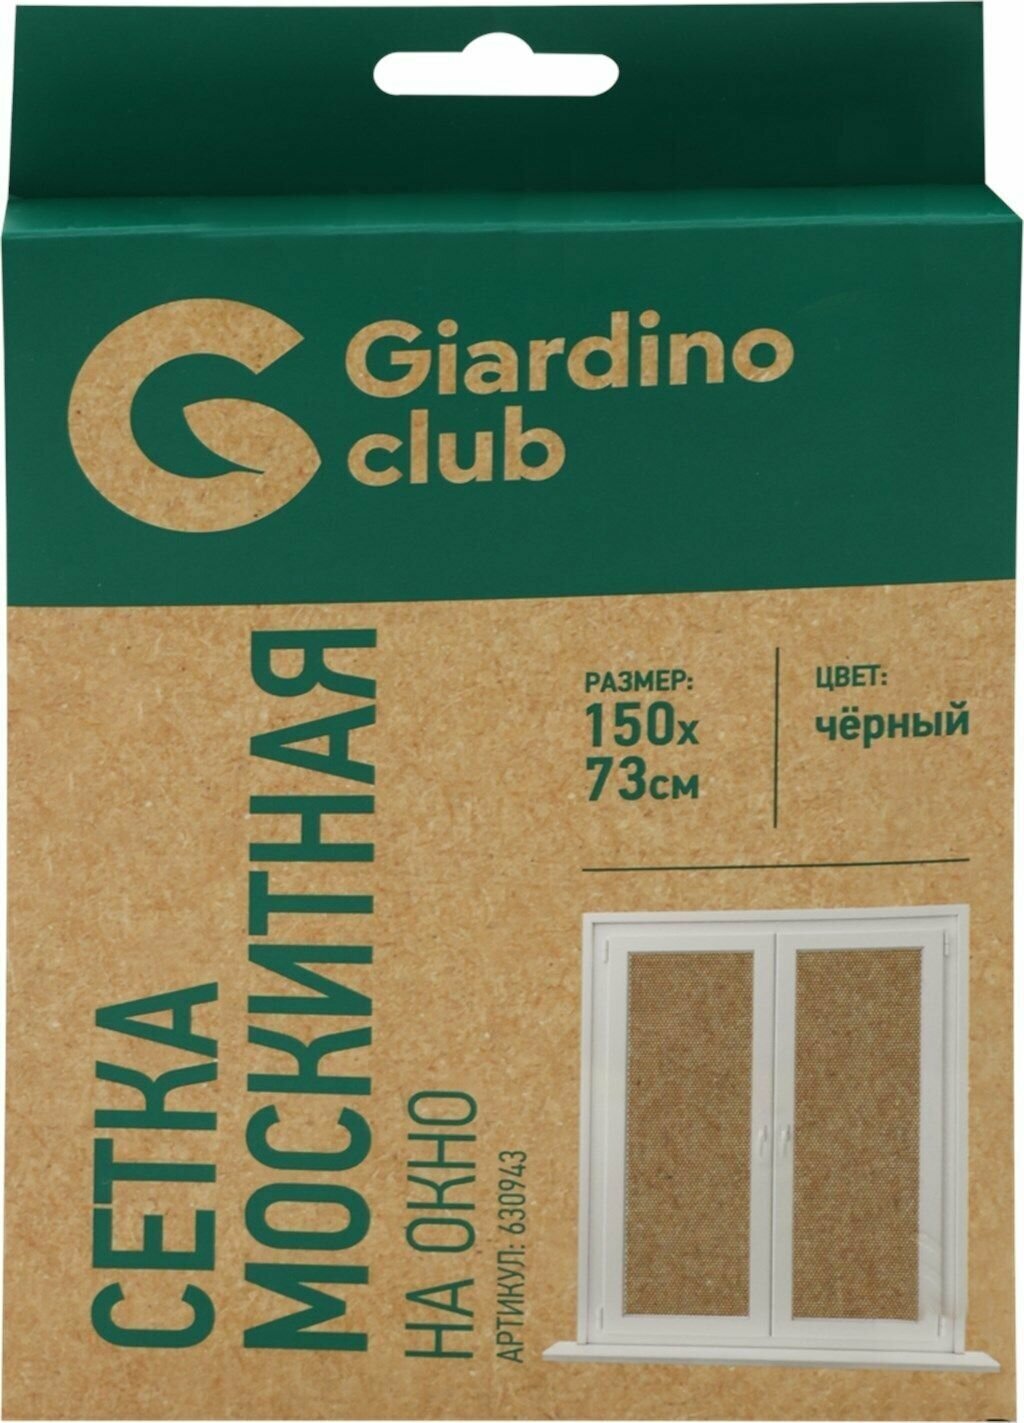 Сетка москитная на окно GIARDINO CLUB 150x73см, черная, Арт. 630943 - 4 шт.